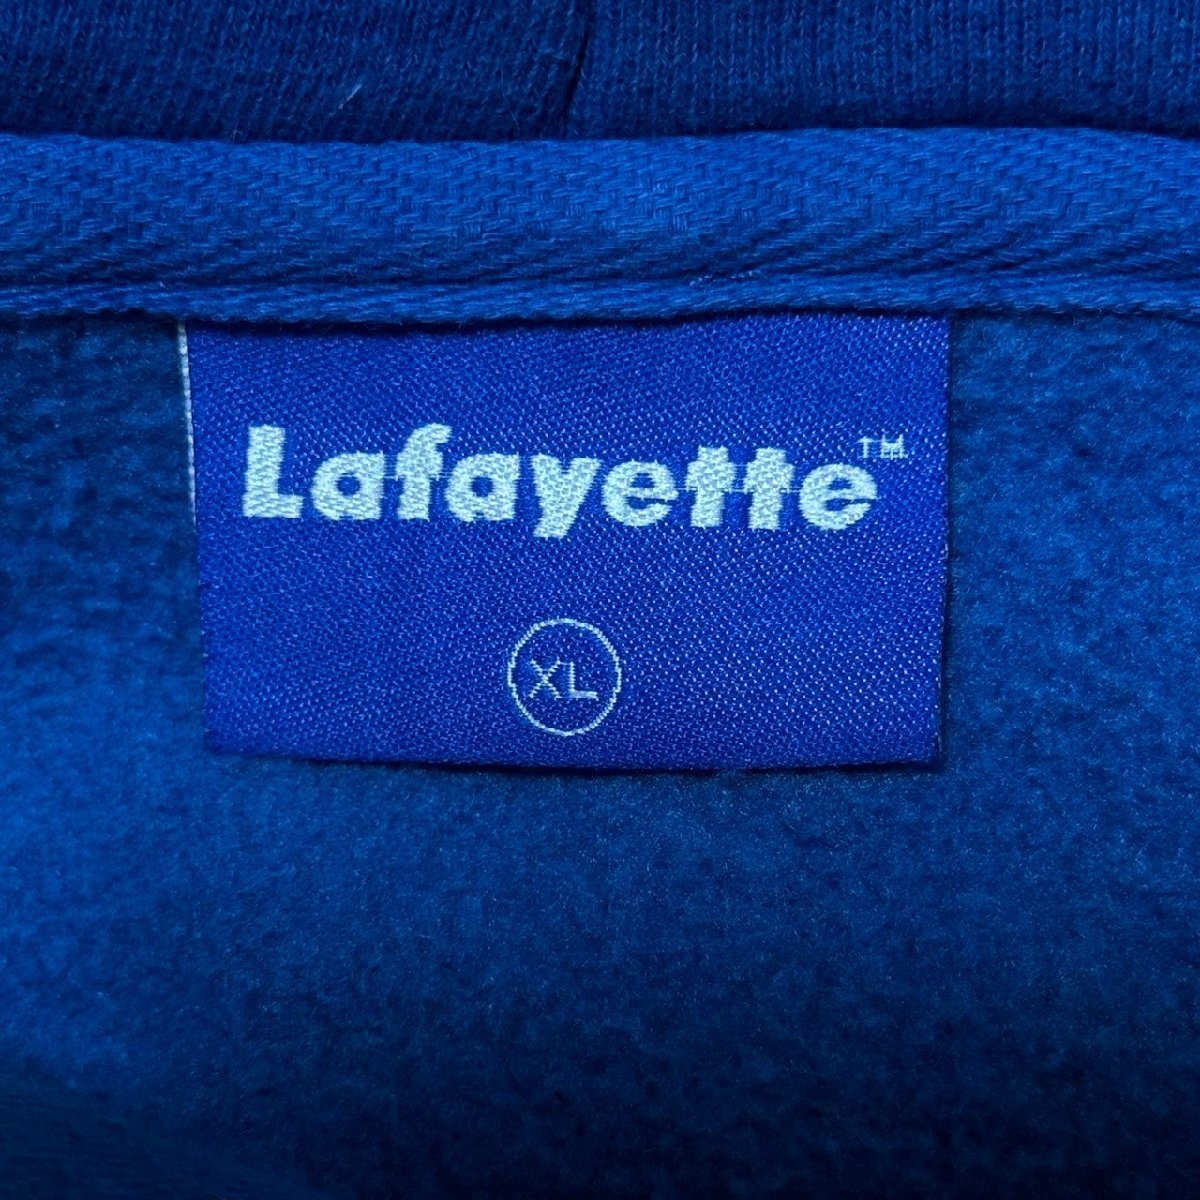 (^w^)b Lafayette ラファイエット スウェット プルオーバー パーカー 裏起毛 ドロップショルダー NYC ビッグ ロゴ ゆったり 青 XL 7904EE_画像7